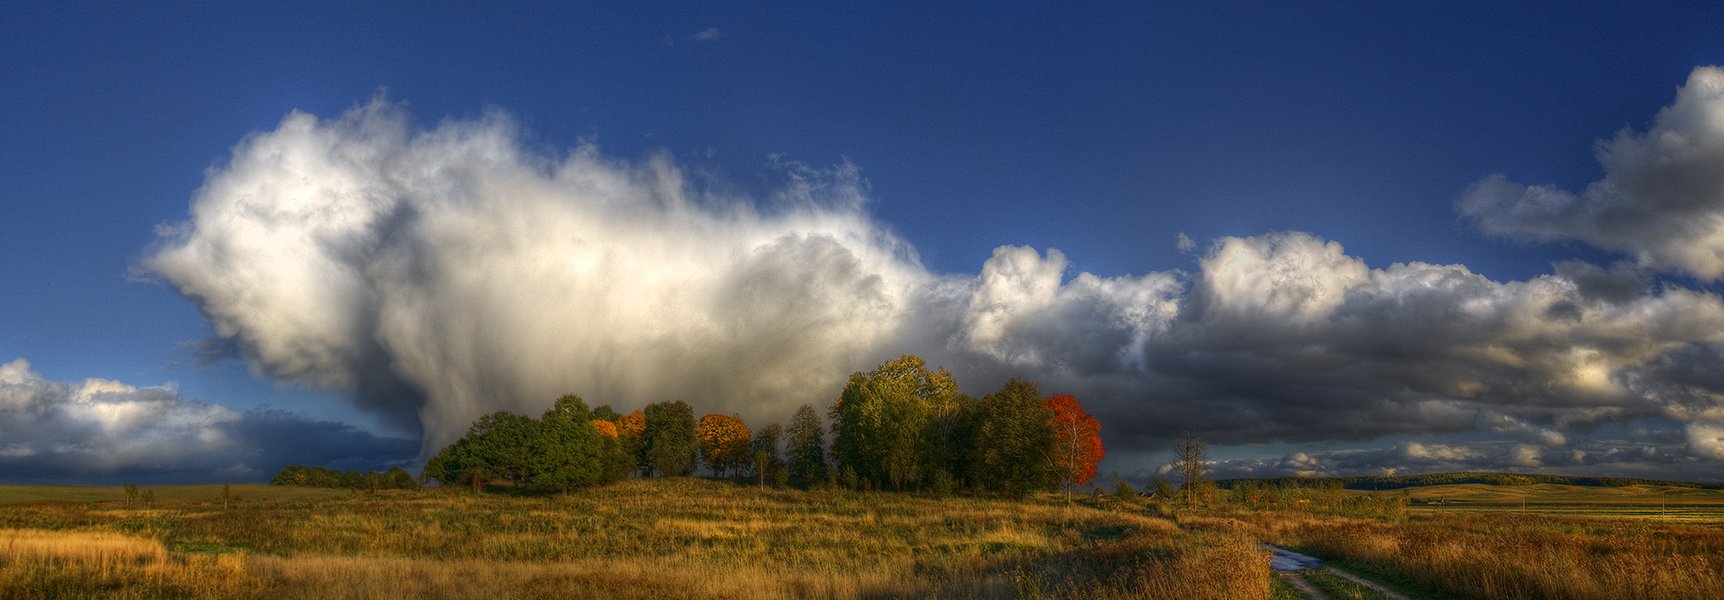 осень, деревья, туча, гроза, Dmitry Apalikov